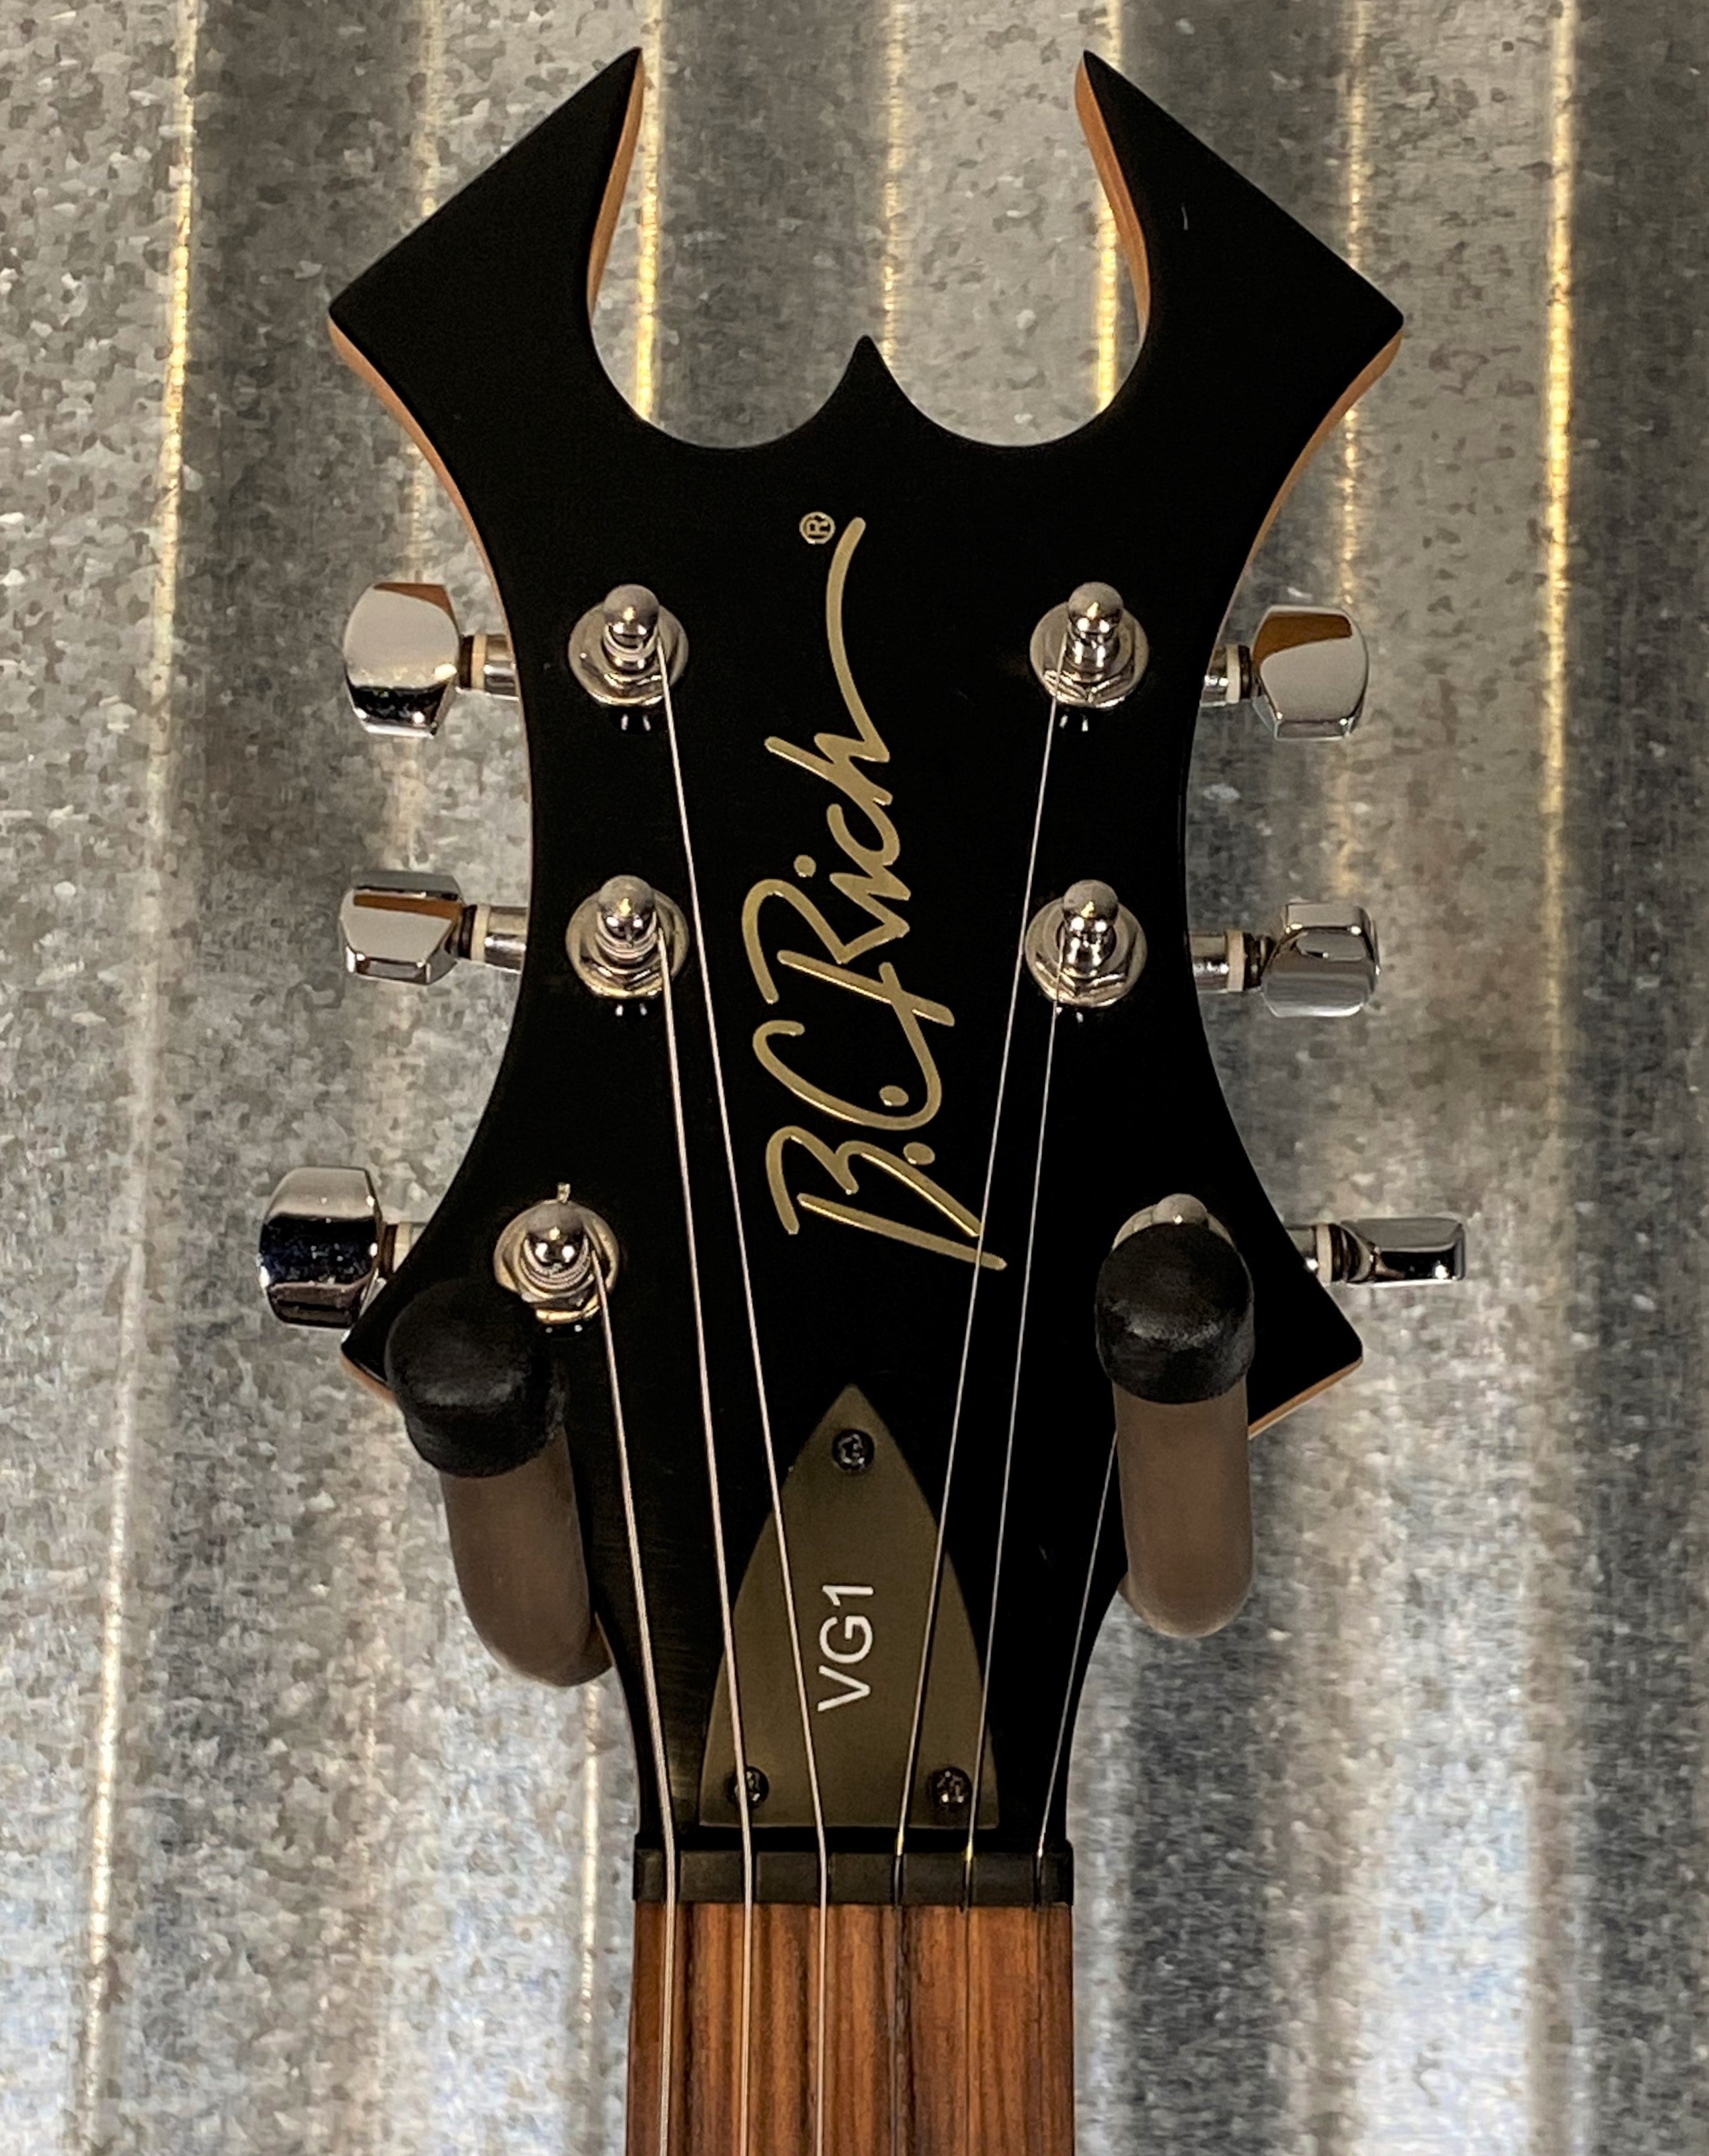 BC Rich VG-1 Virgin Black Guitar #3637 Used